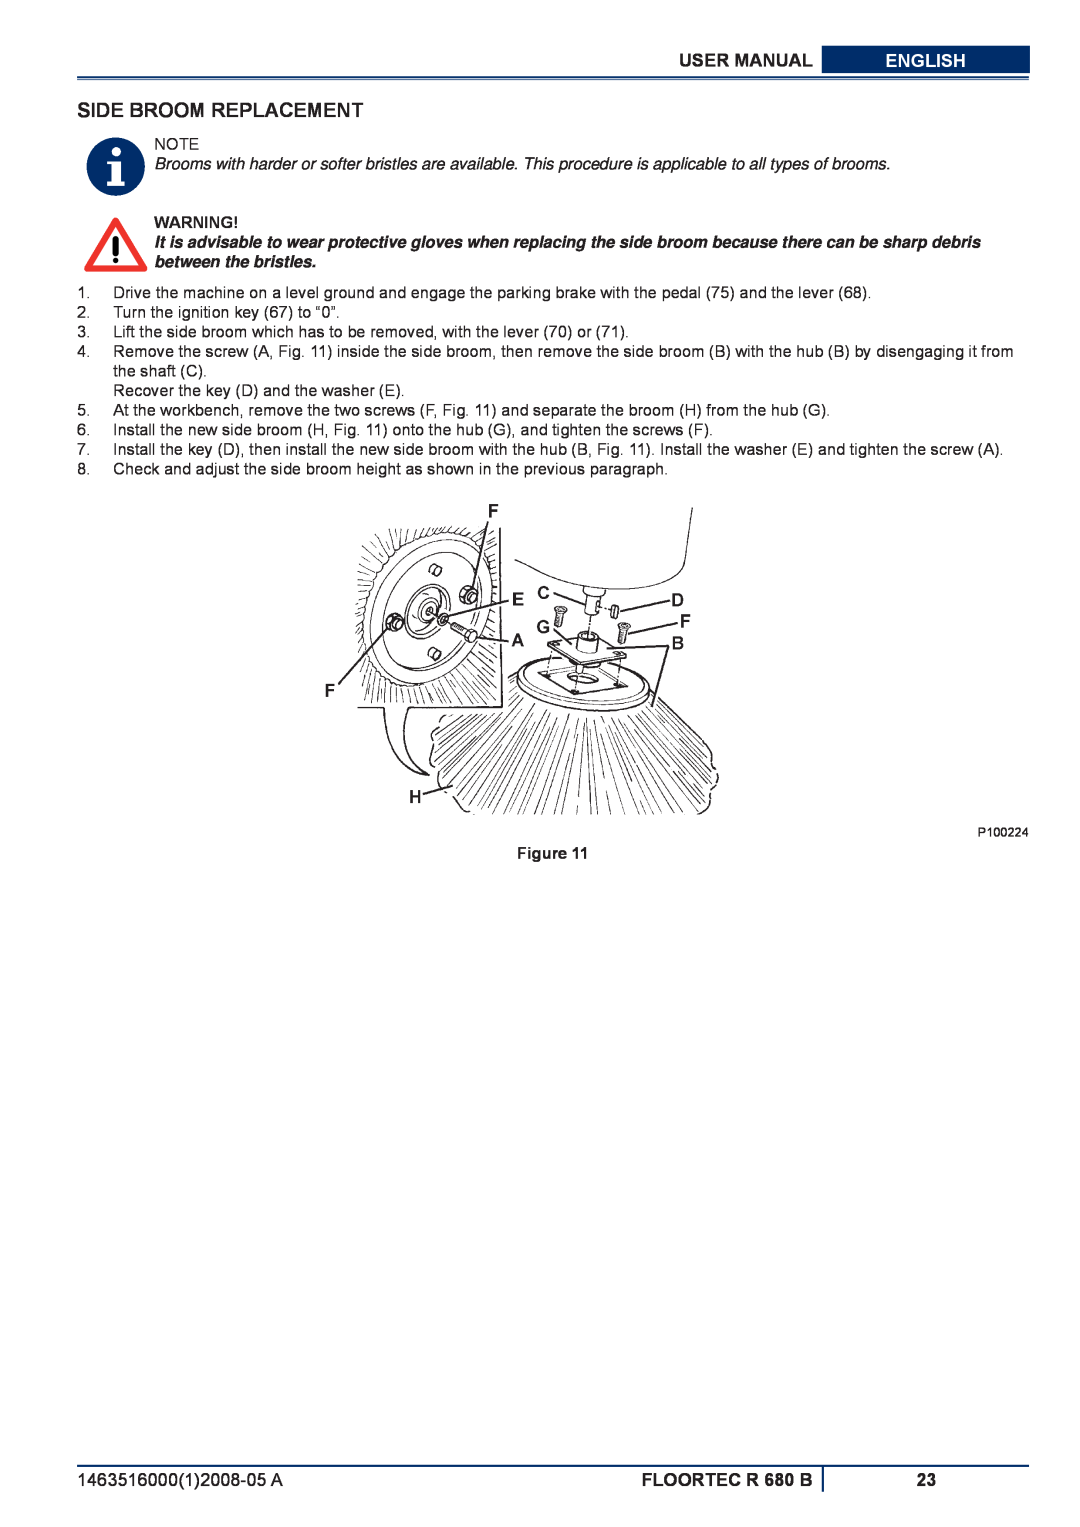 Nilfisk-ALTO manuel dutilisation Side Broom Replacement, User Manual, English, FLOORTEC R 680 B 